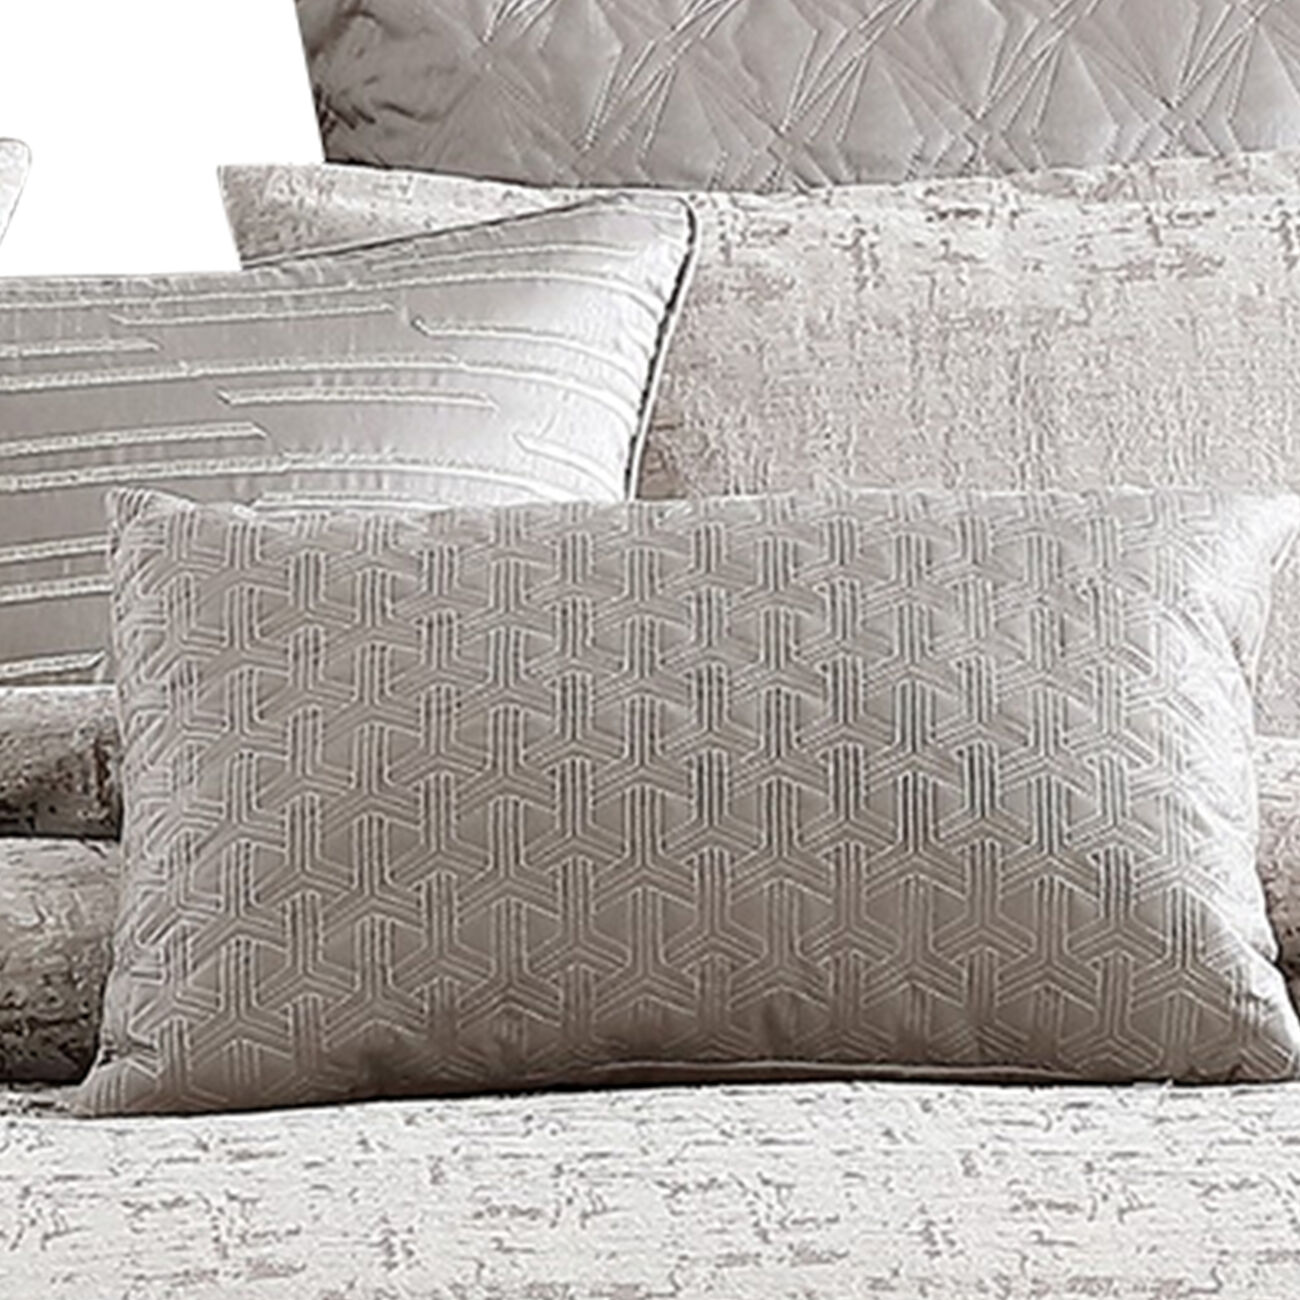 10 Piece King Polyester Comforter Set with Jacquard Print, Gray